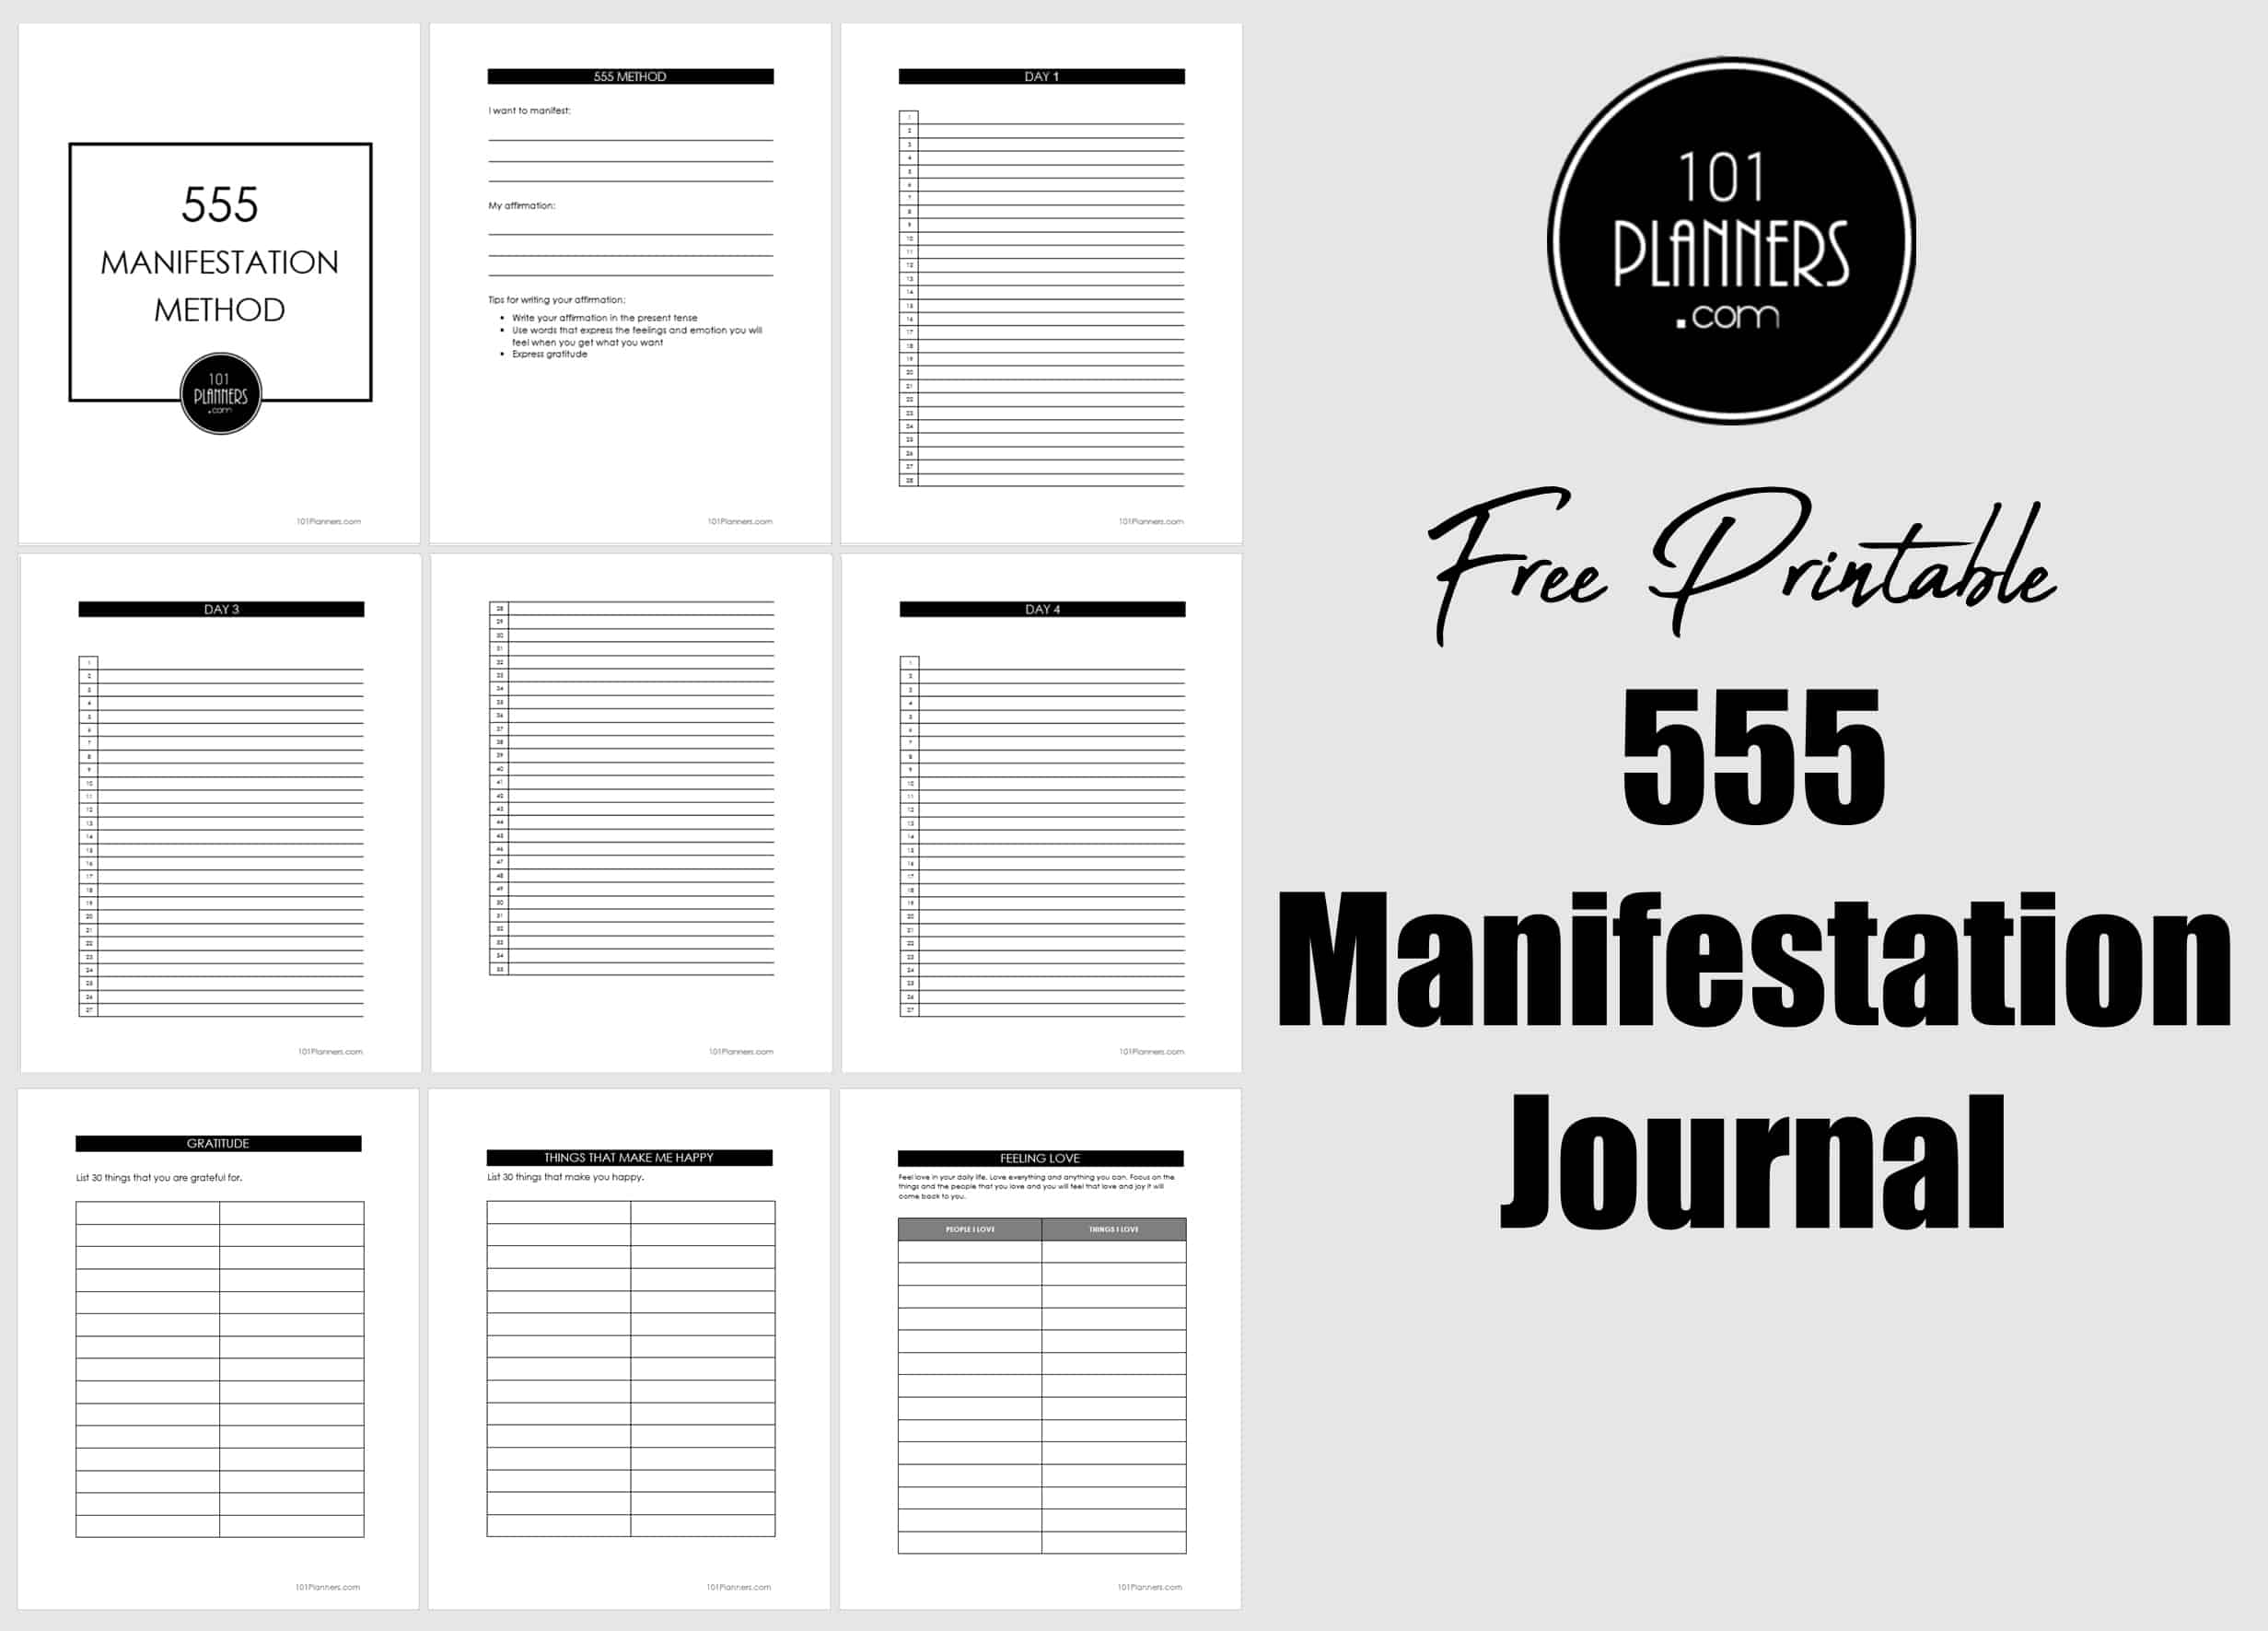 What is 555 manifest method?